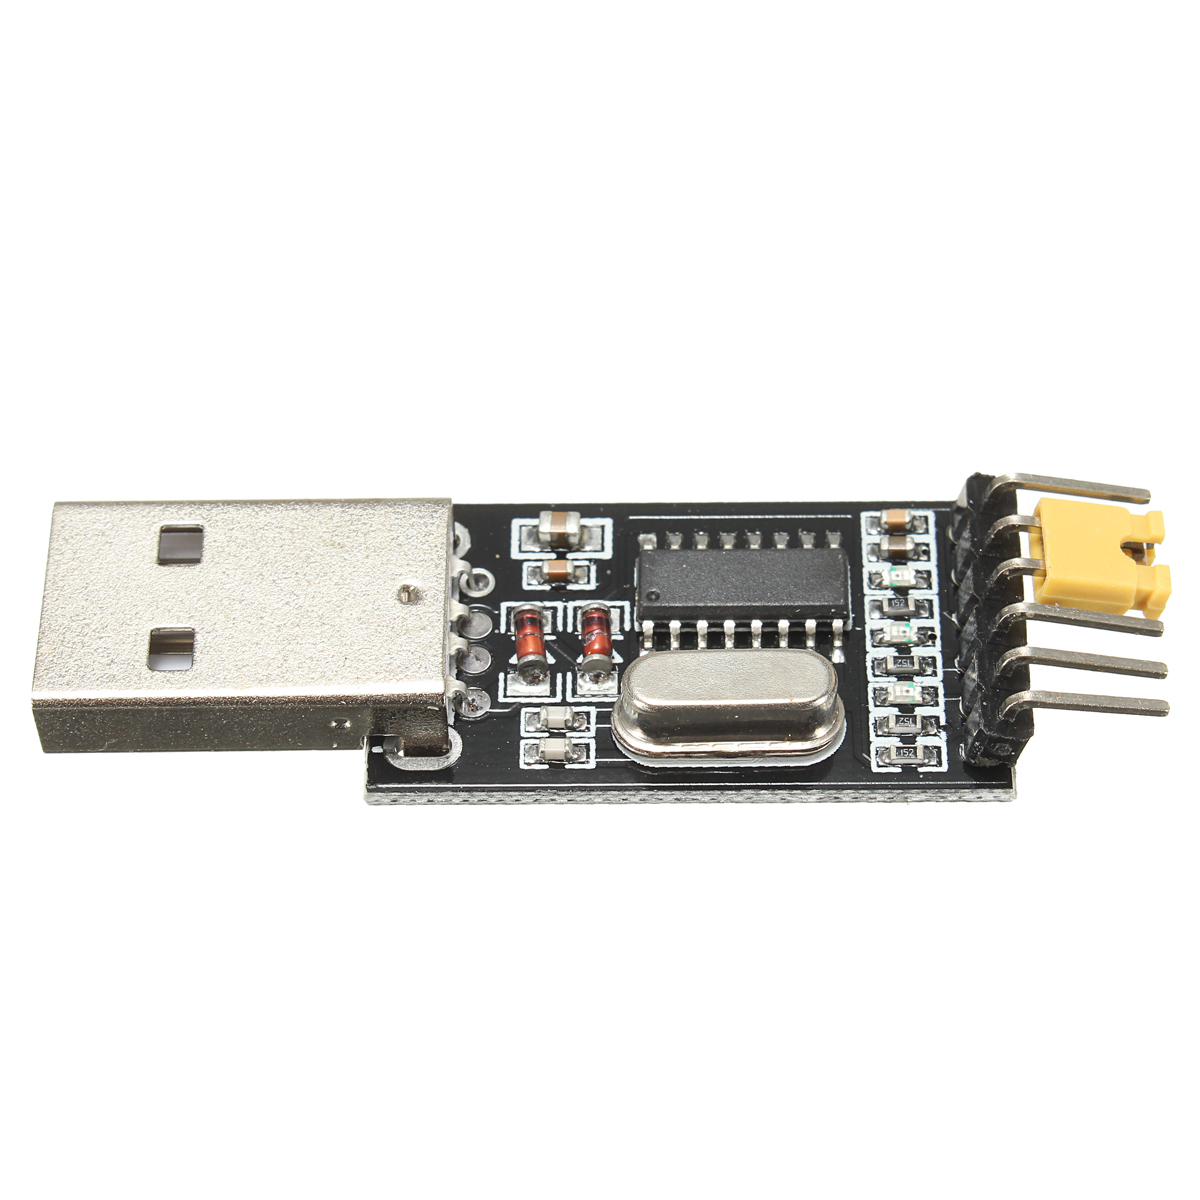 20pcs-33V-5V-USB-to-TTL-Converter-CH340G-UART-Serial-Adapter-Module-STC-1314968-4